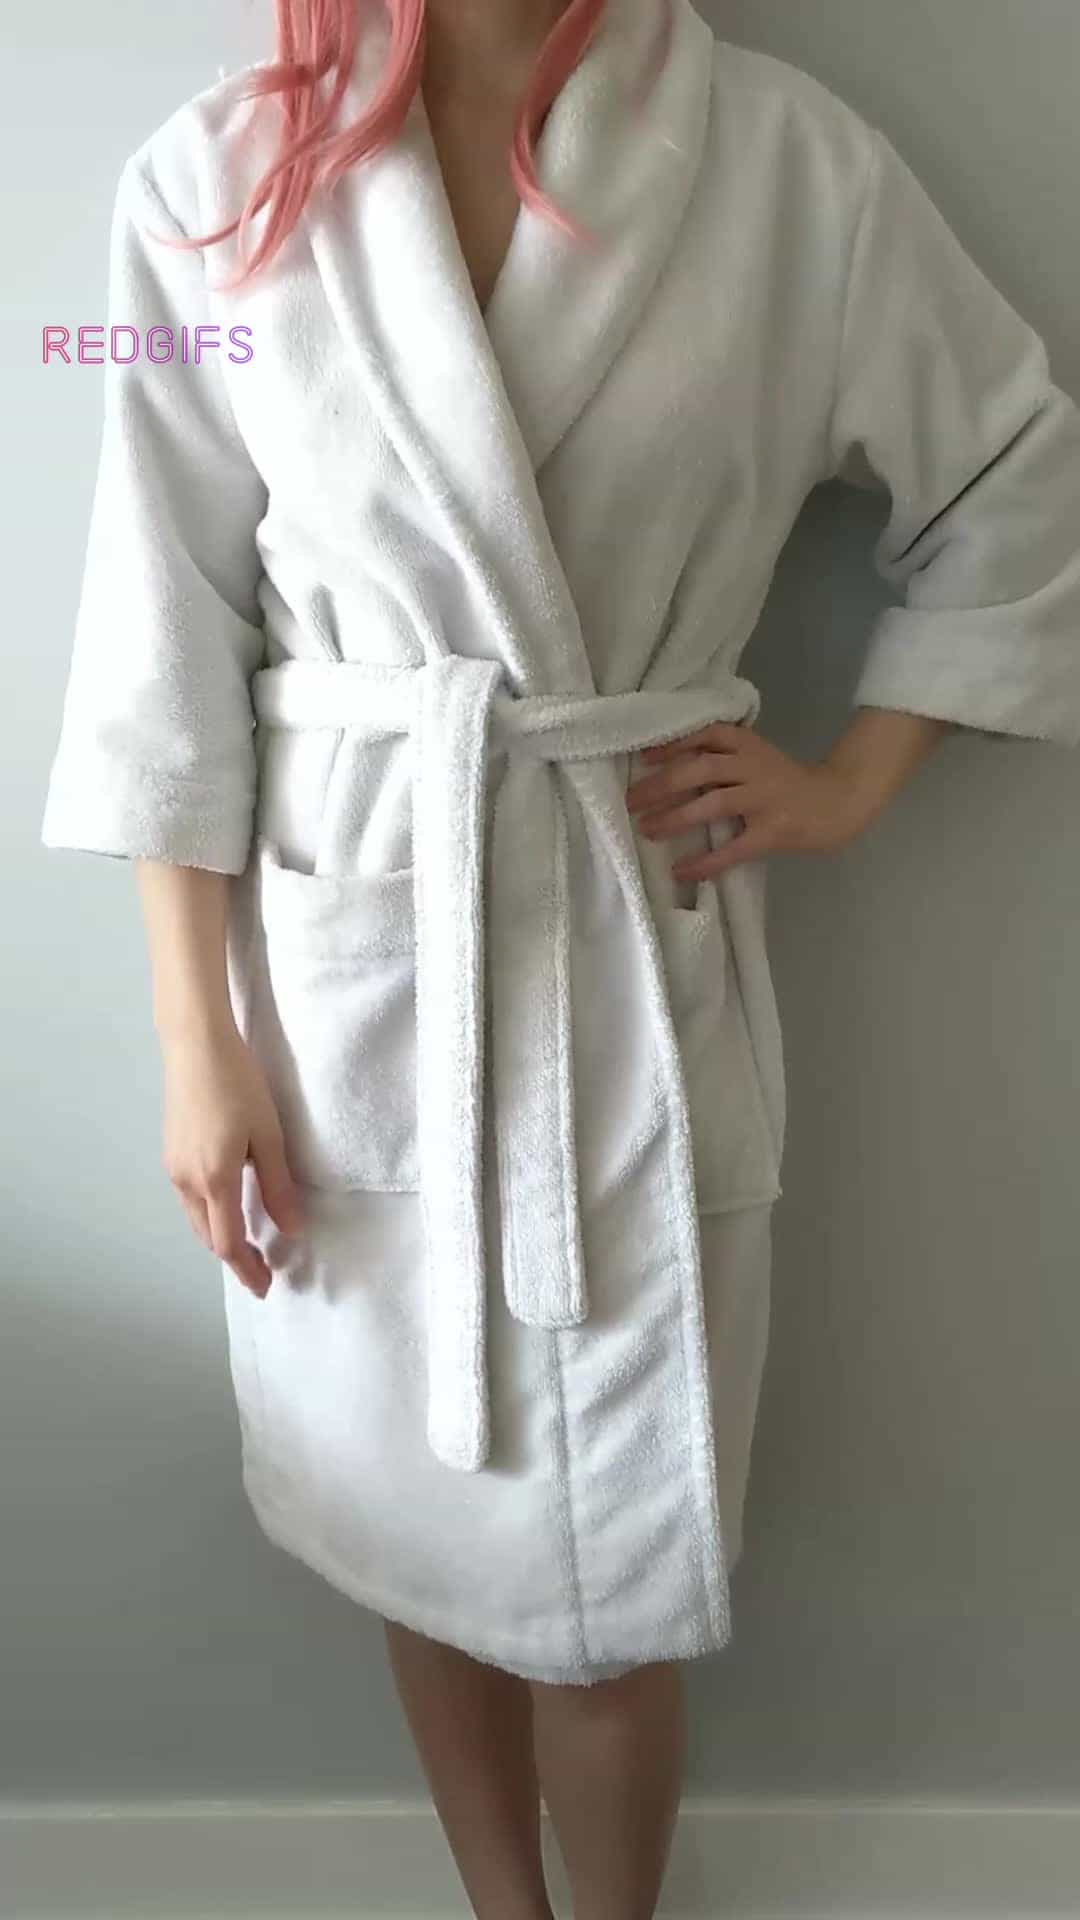 I love the spontaneity of a robe